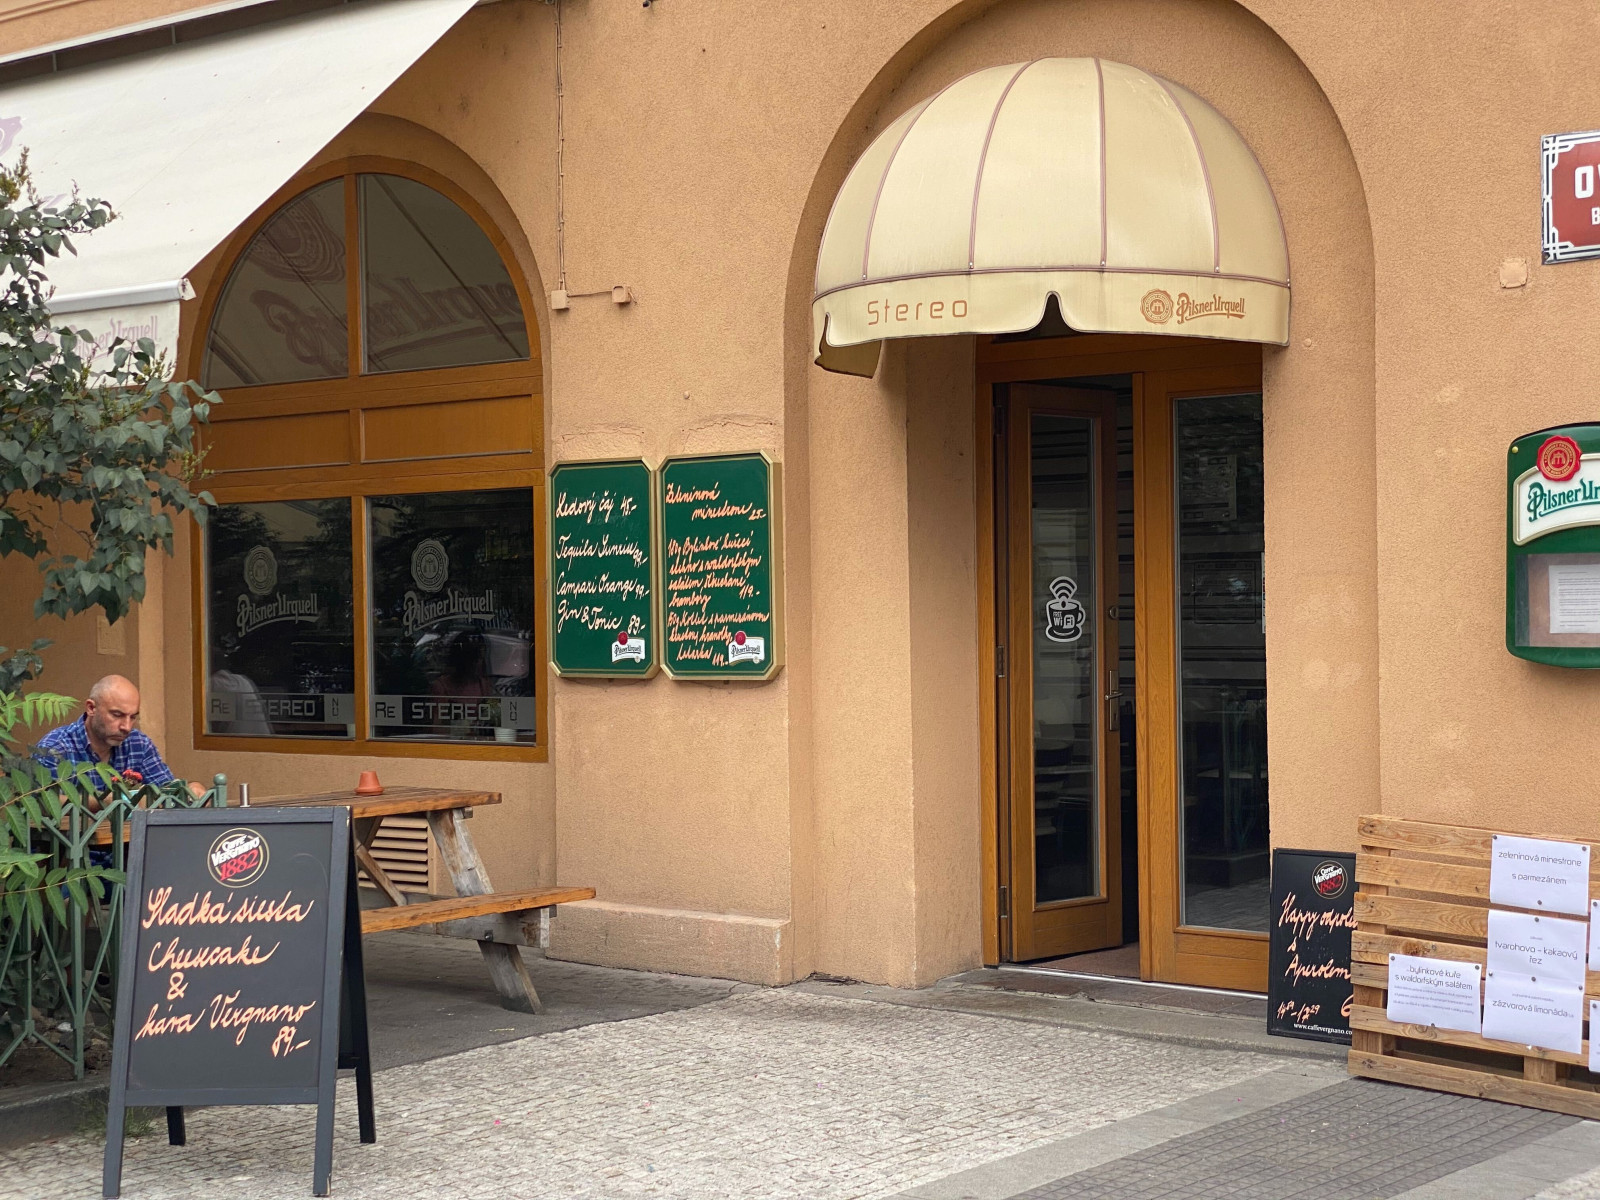 Stereo Restaurant in Prague 7 via Jason Pirodsky